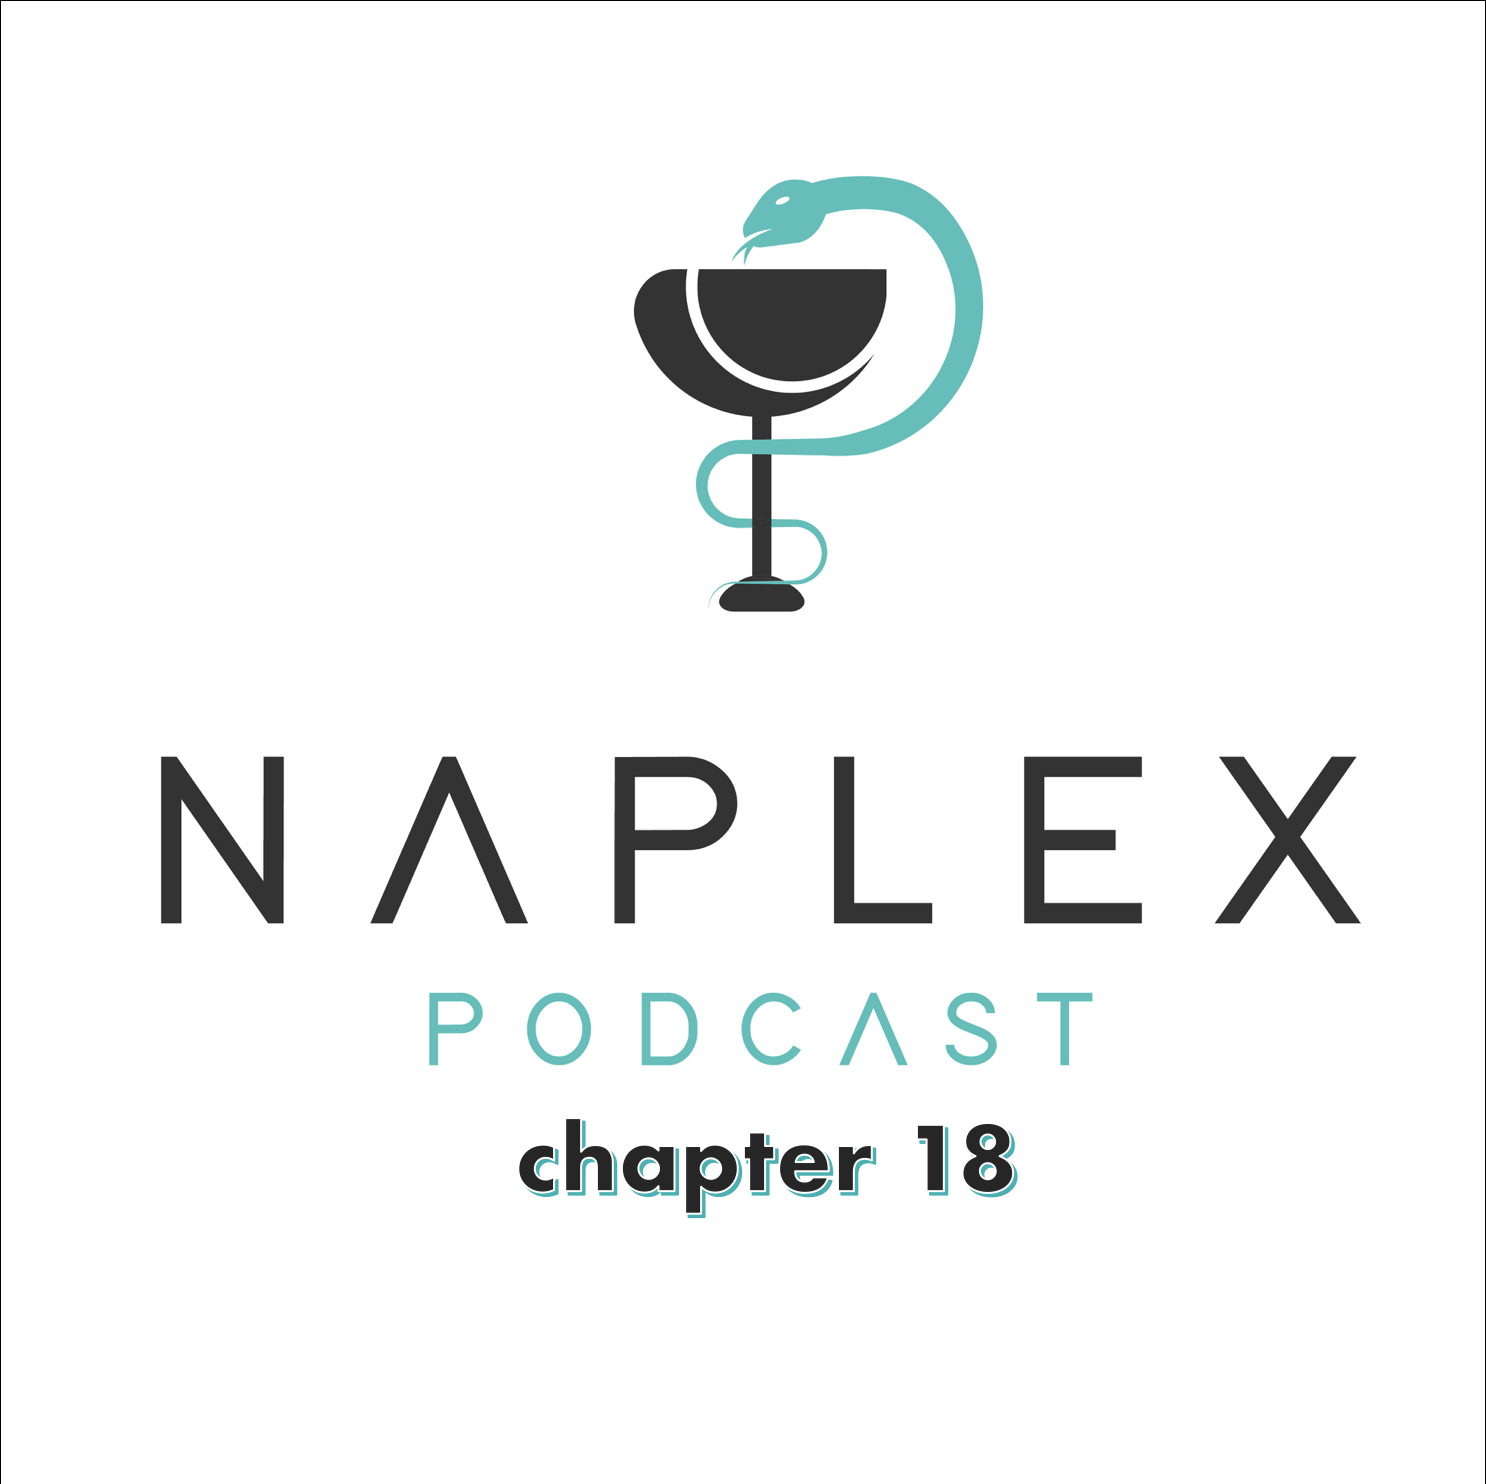 Naplex Podcast | Chapter 18: Medication Safety & Quality Improvement